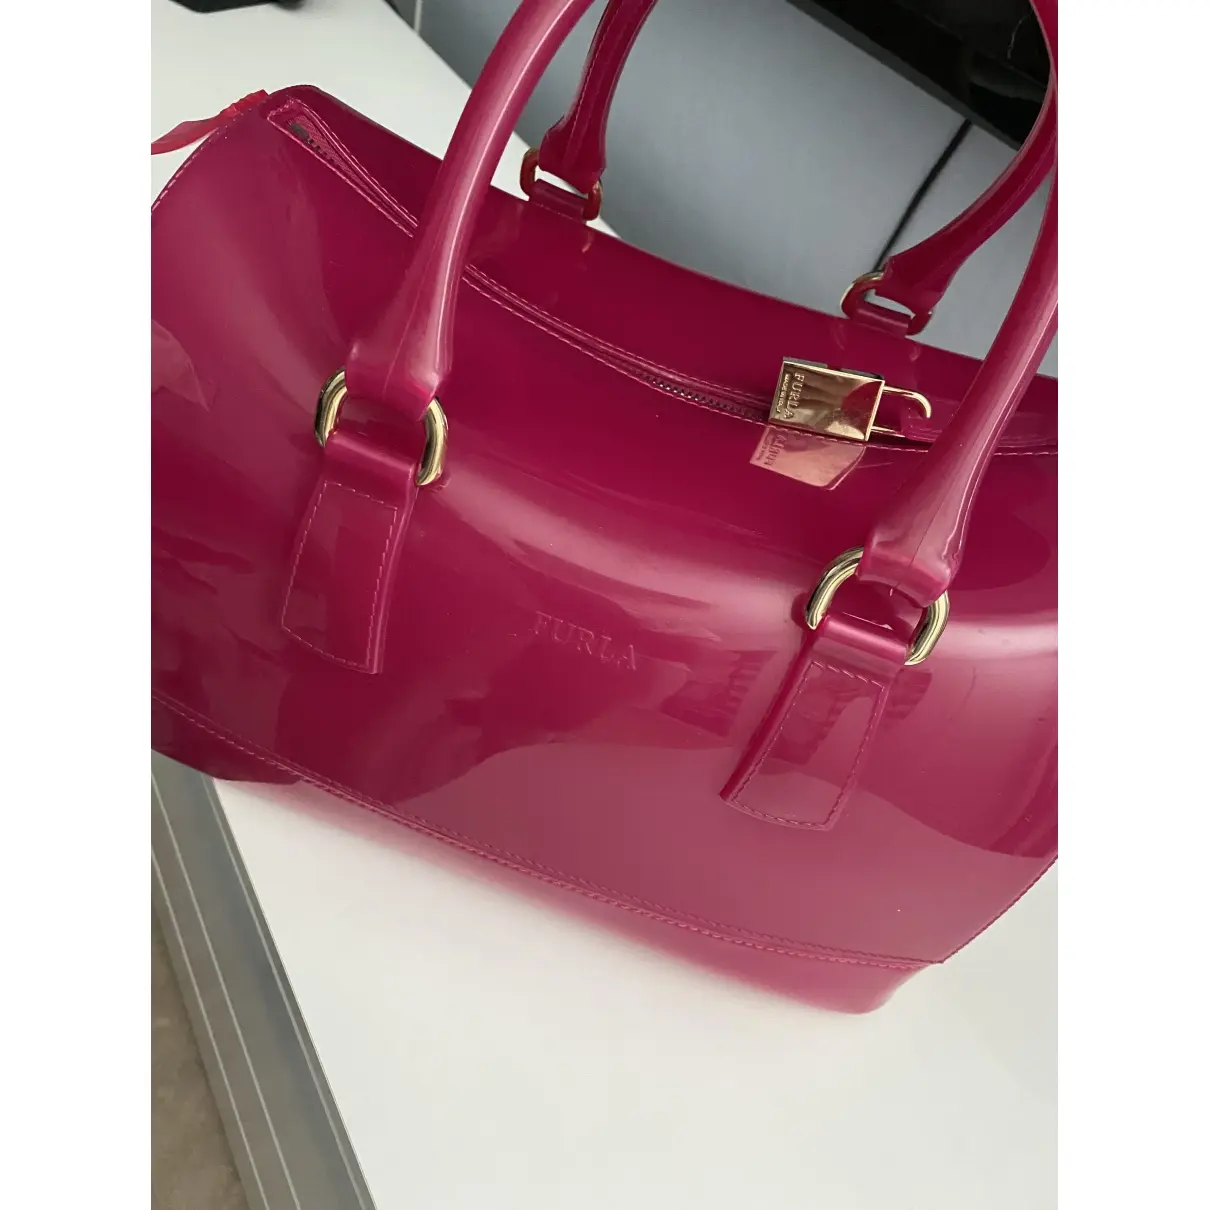 Furla Candy Bag handbag for sale